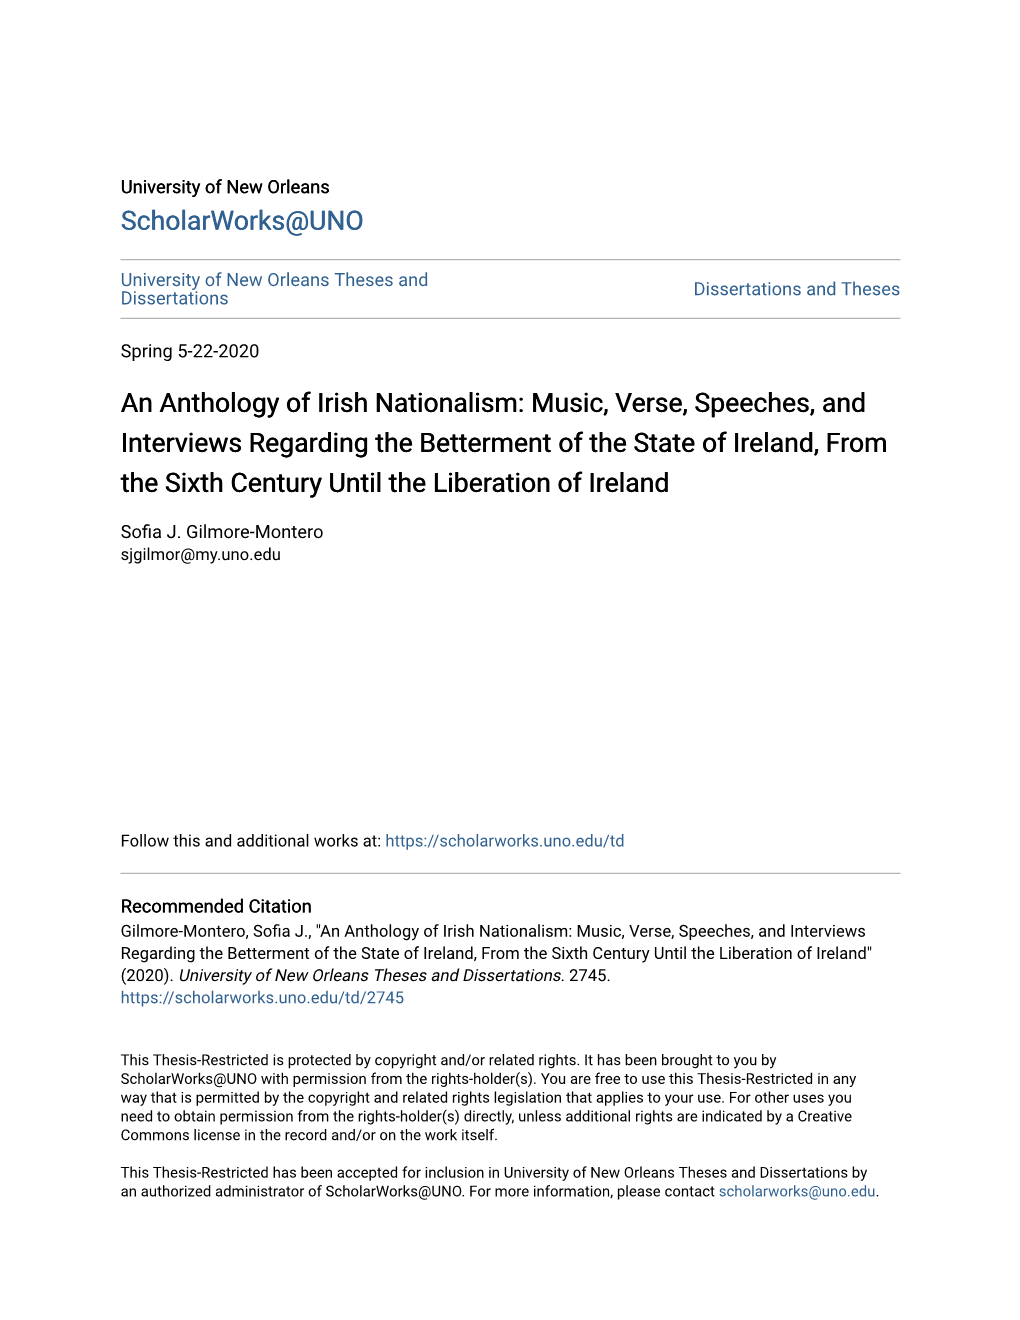 An Anthology of Irish Nationalism